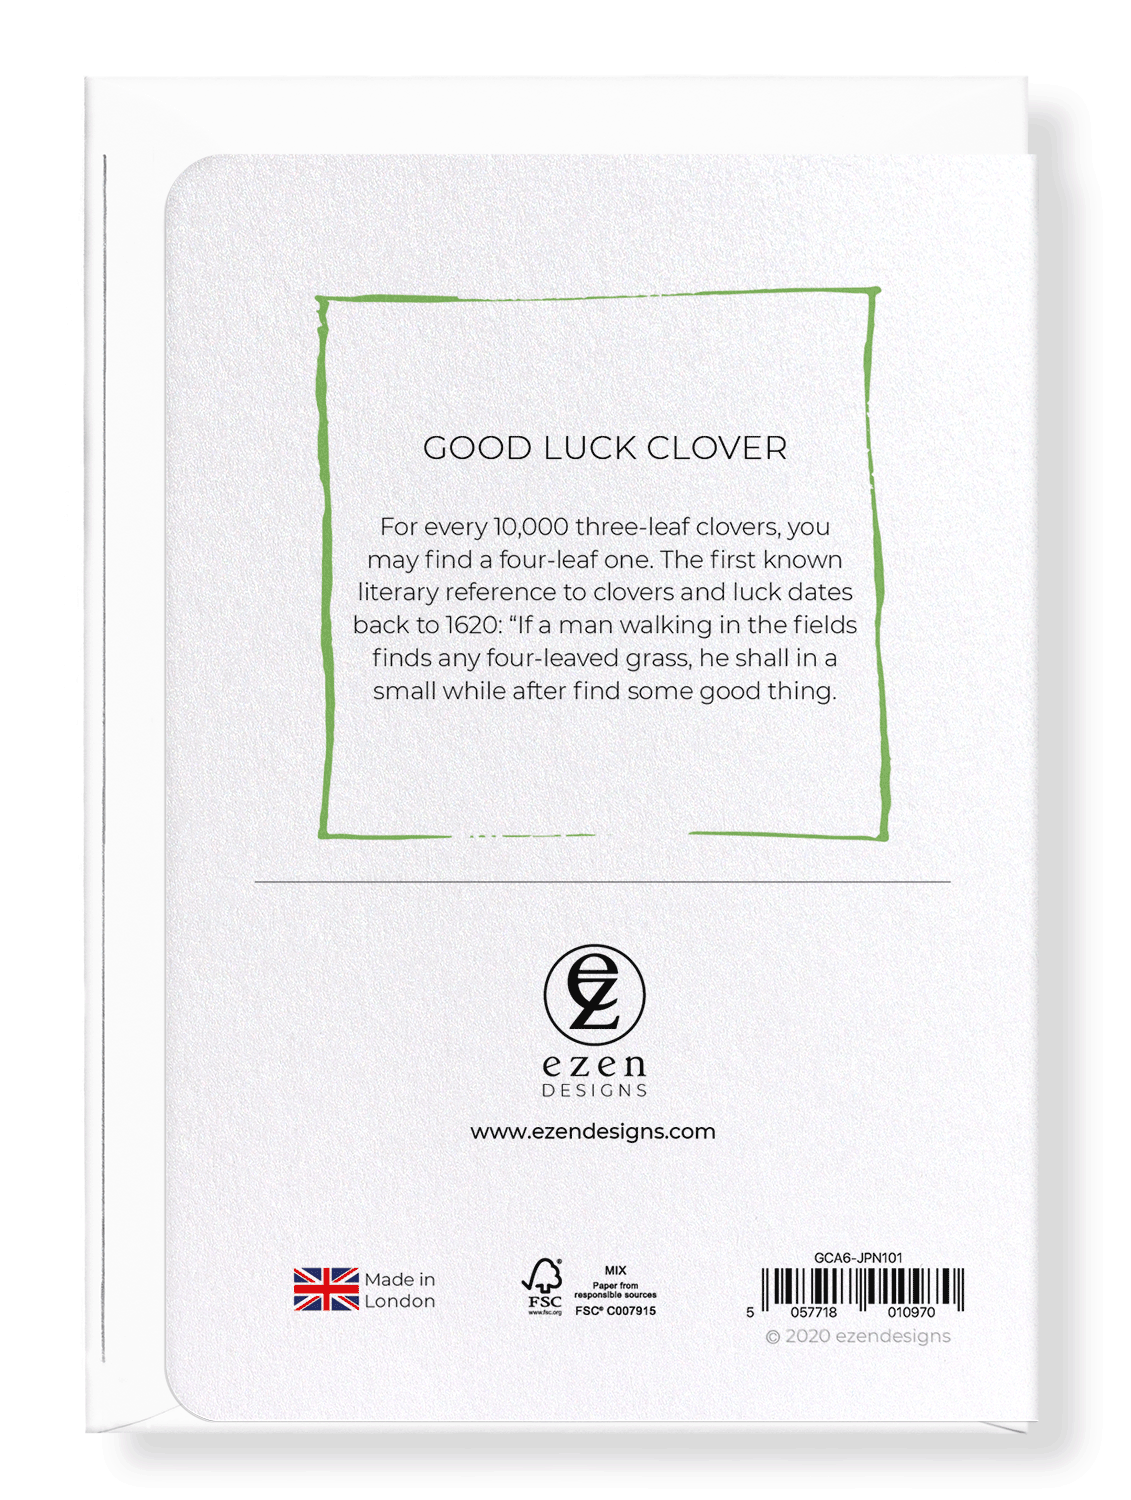 Ezen Designs - Good luck clover - Greeting Card - Back